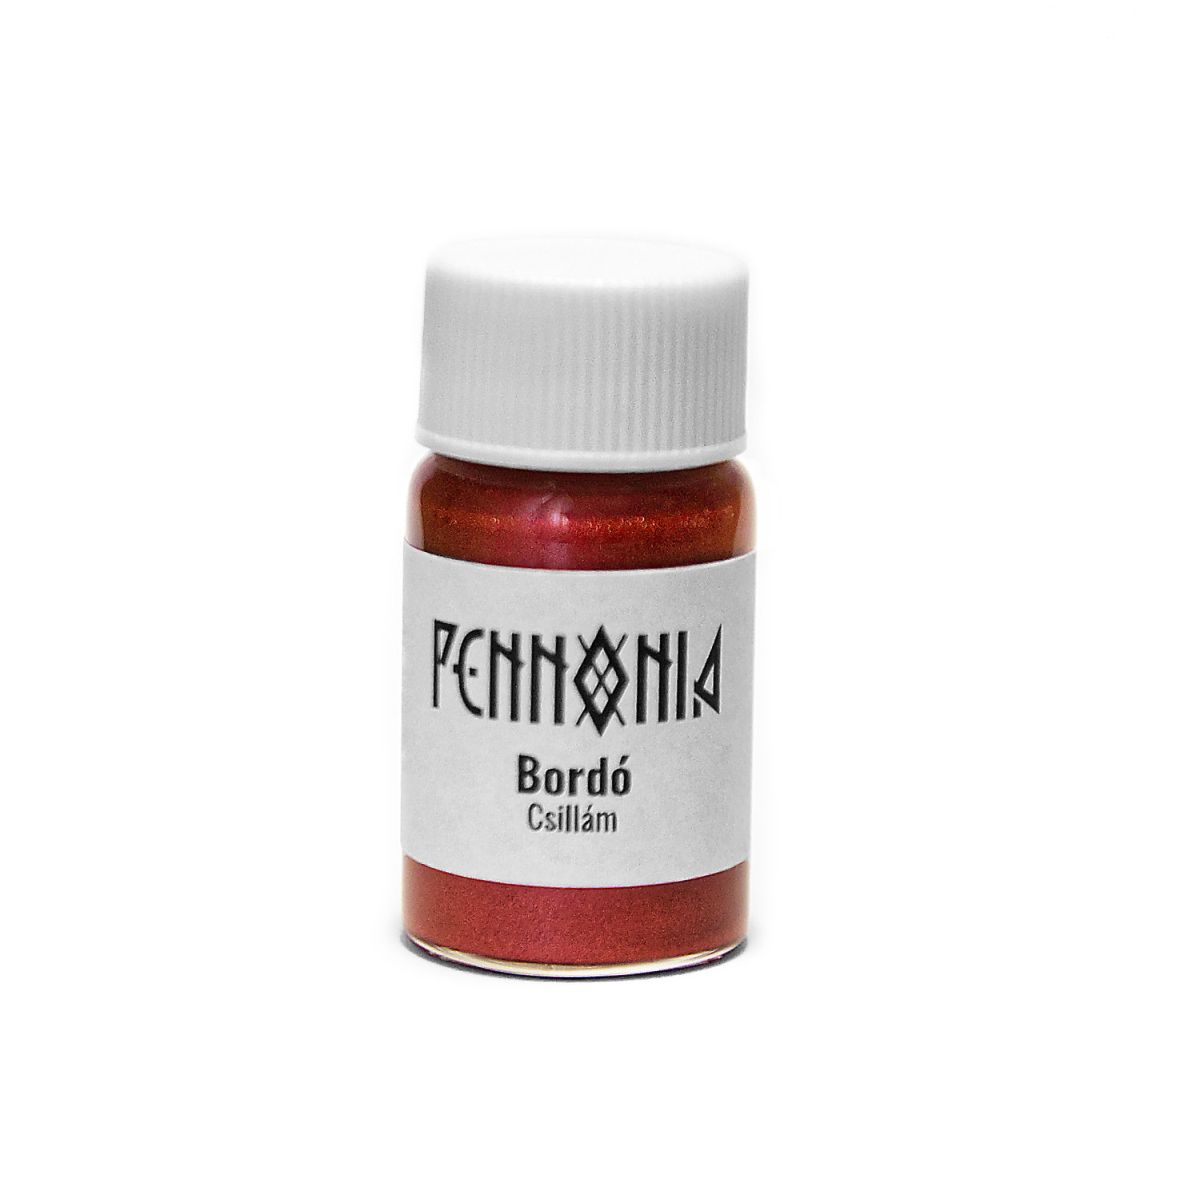 Pennonia shimmer additive - Bordo